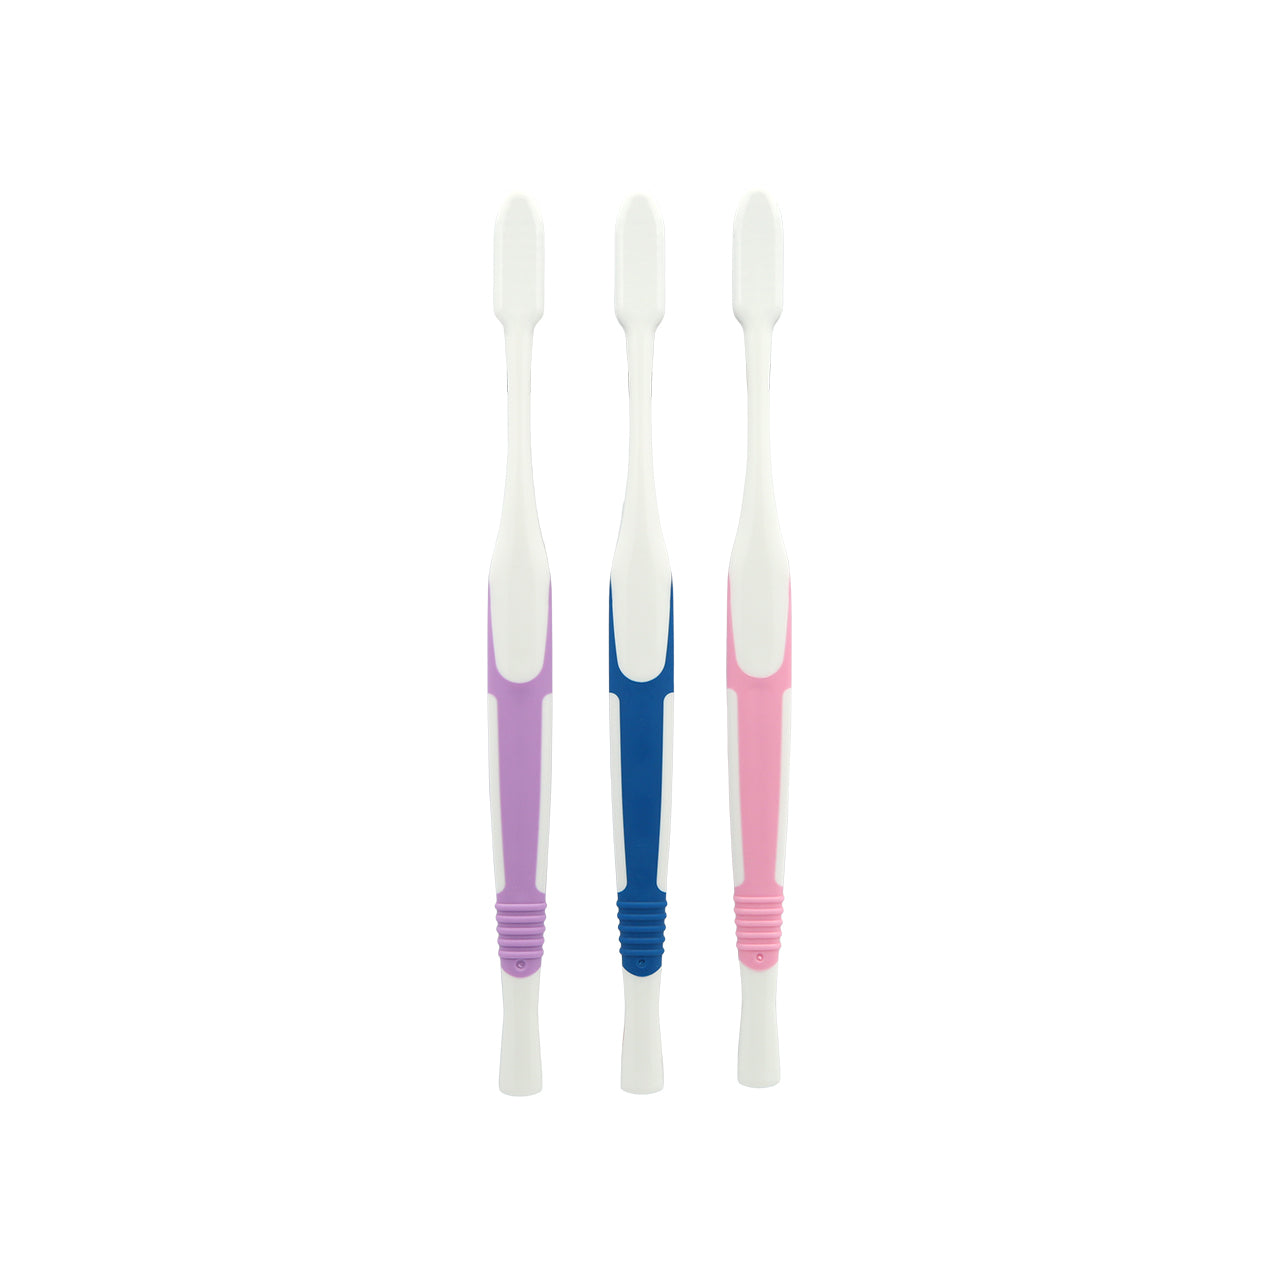 Lion Systema Toothbrush Spiral Bristle Regular Head 3pcs